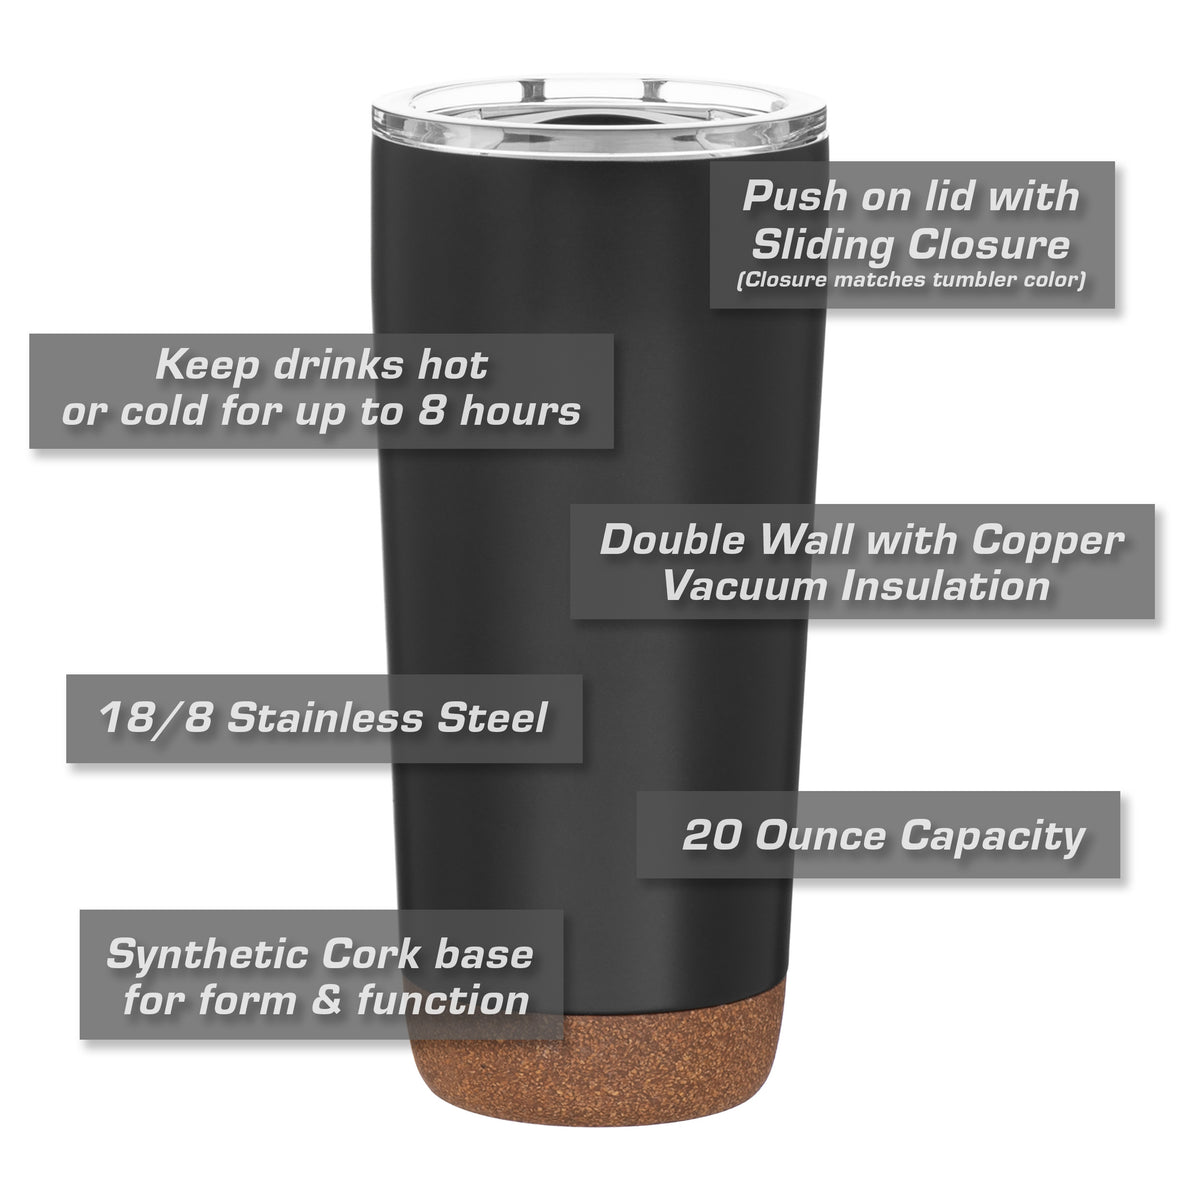 McLaren Senna Insulated Stainless Steel Coffee Tumbler - 20 oz